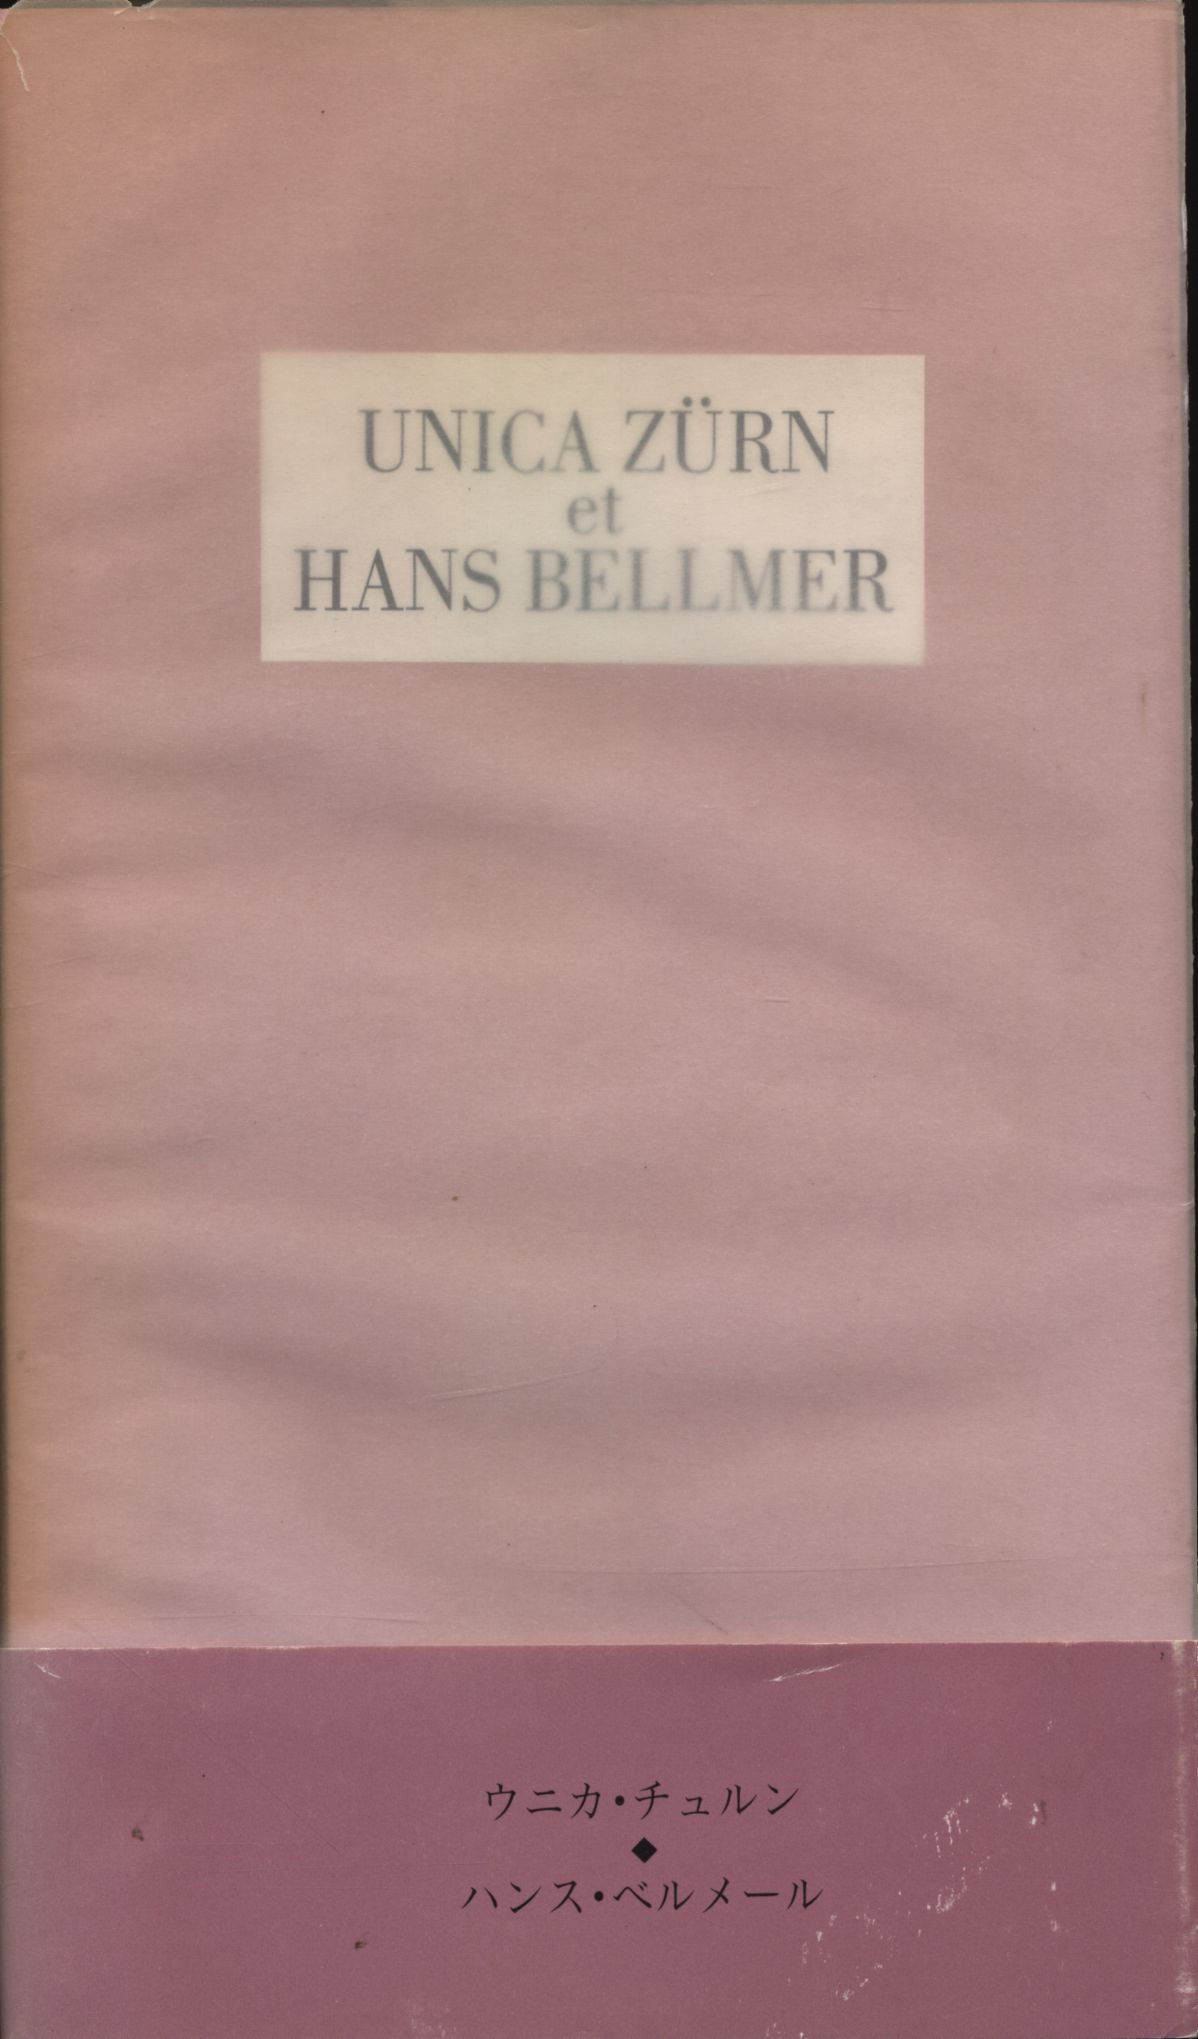 Hans Bellmer unica zurn et hans bellmer | まんだらけ Mandarake